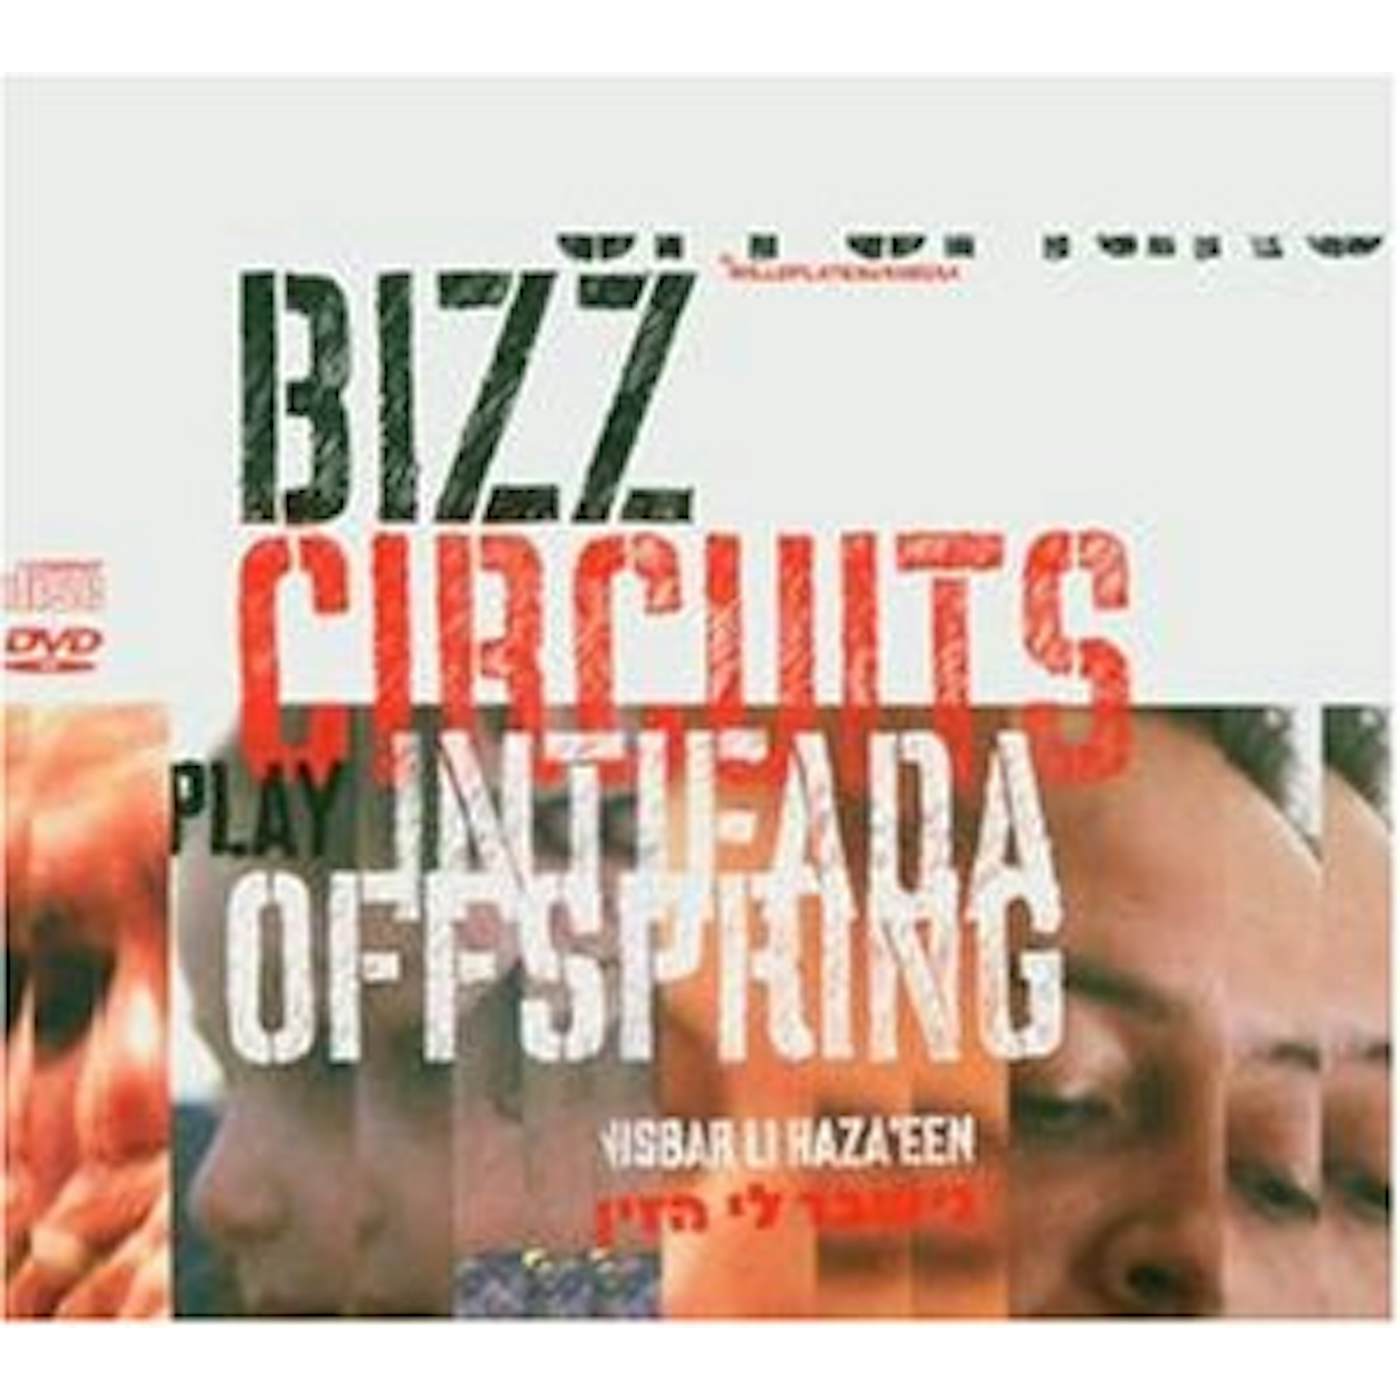 Bizz Circuit Play Intifada Offspr VOL. 1-NISHBAR LI HAZAYIN Vinyl Record